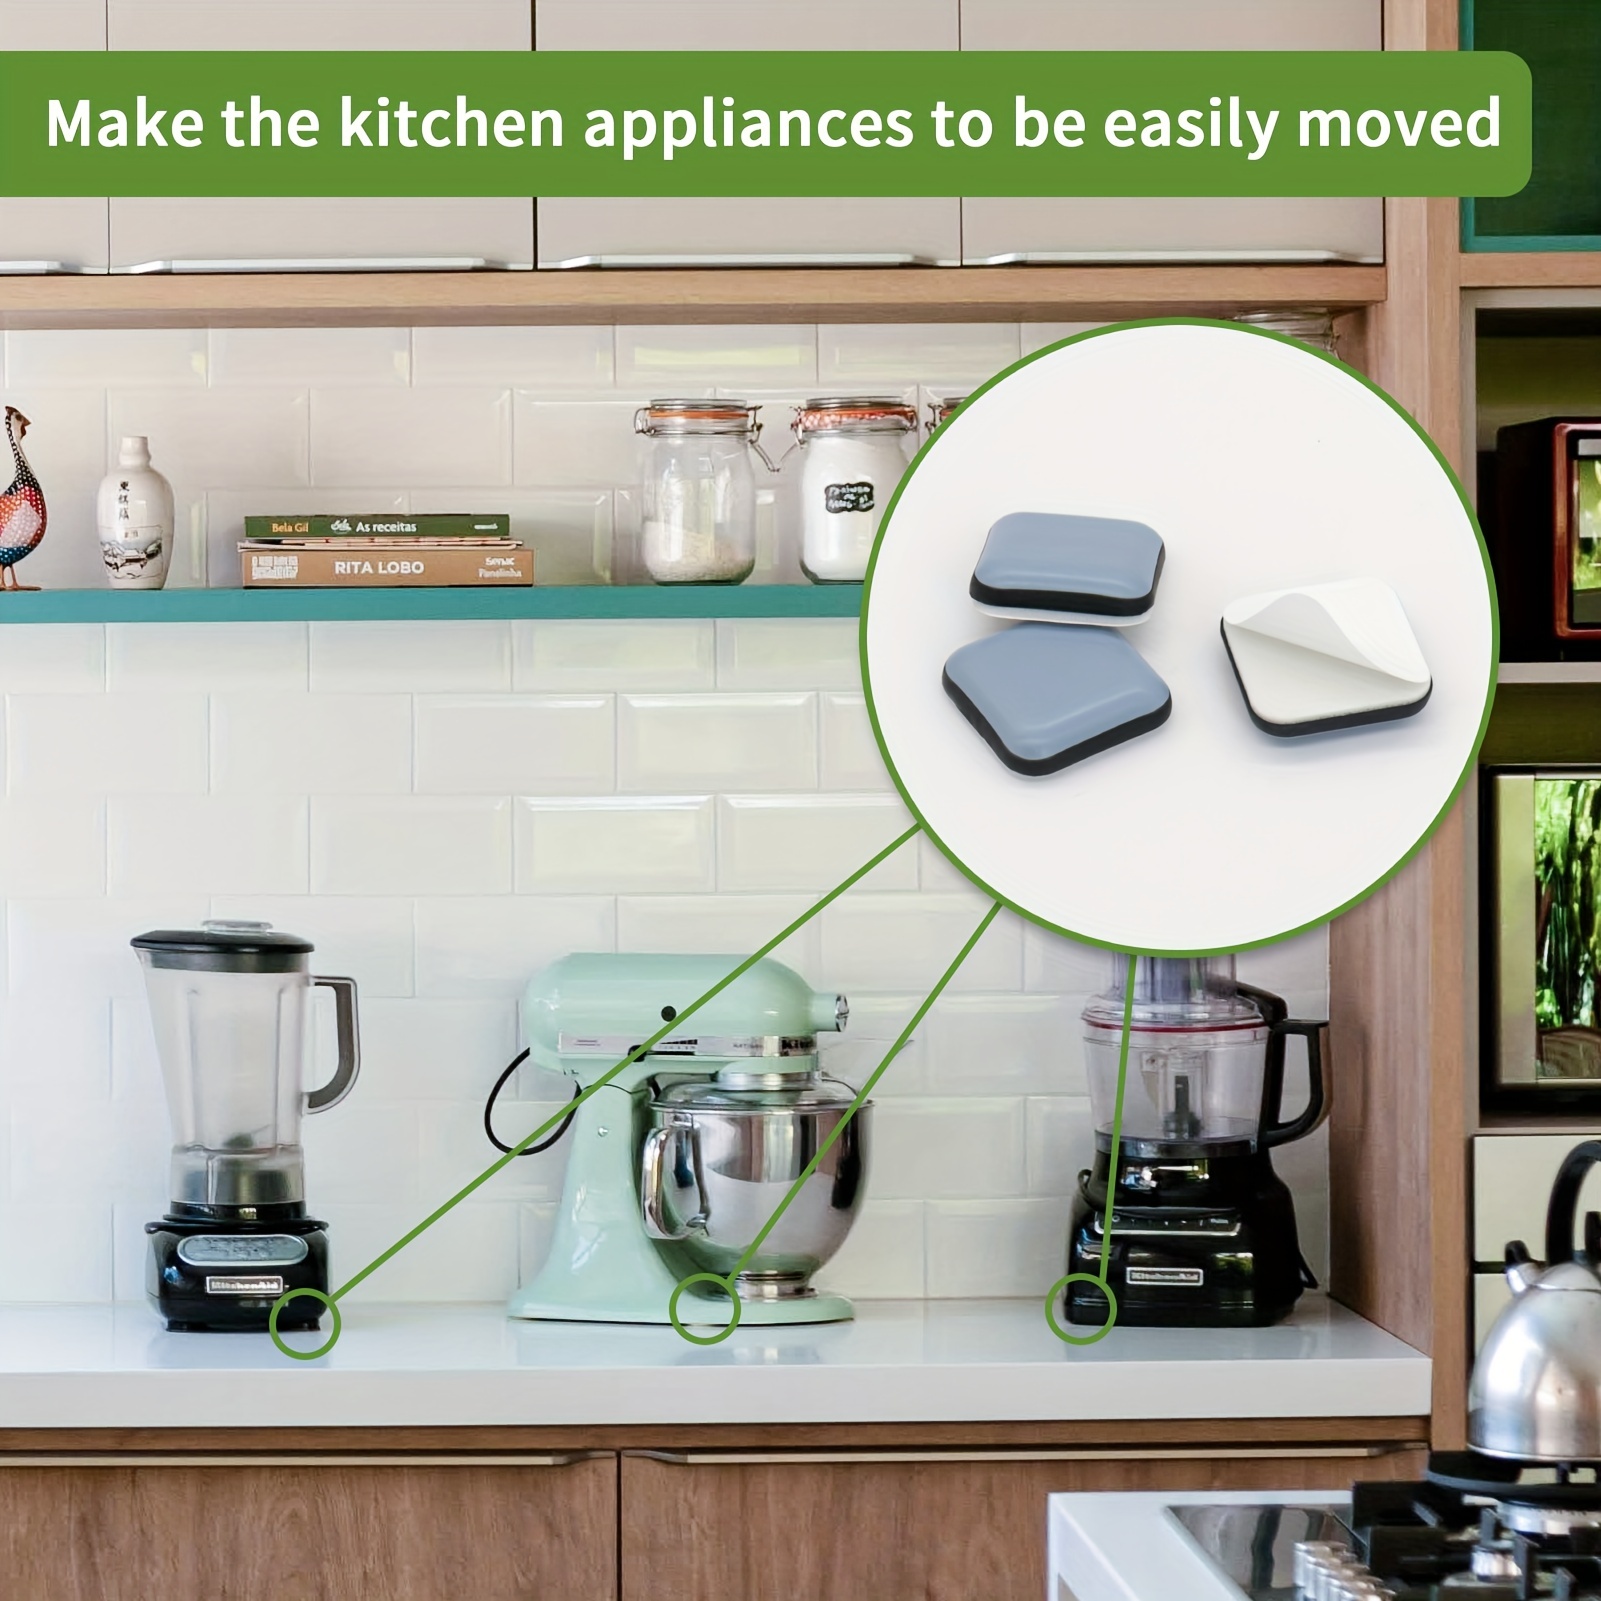 12 Pcs Kitchen Appliance Slider,Appliance Sliders for Kitchen Appliances,DIY Self Adhesive Appliance Slider for Most Coffee Makers,Blenders,Kitchen